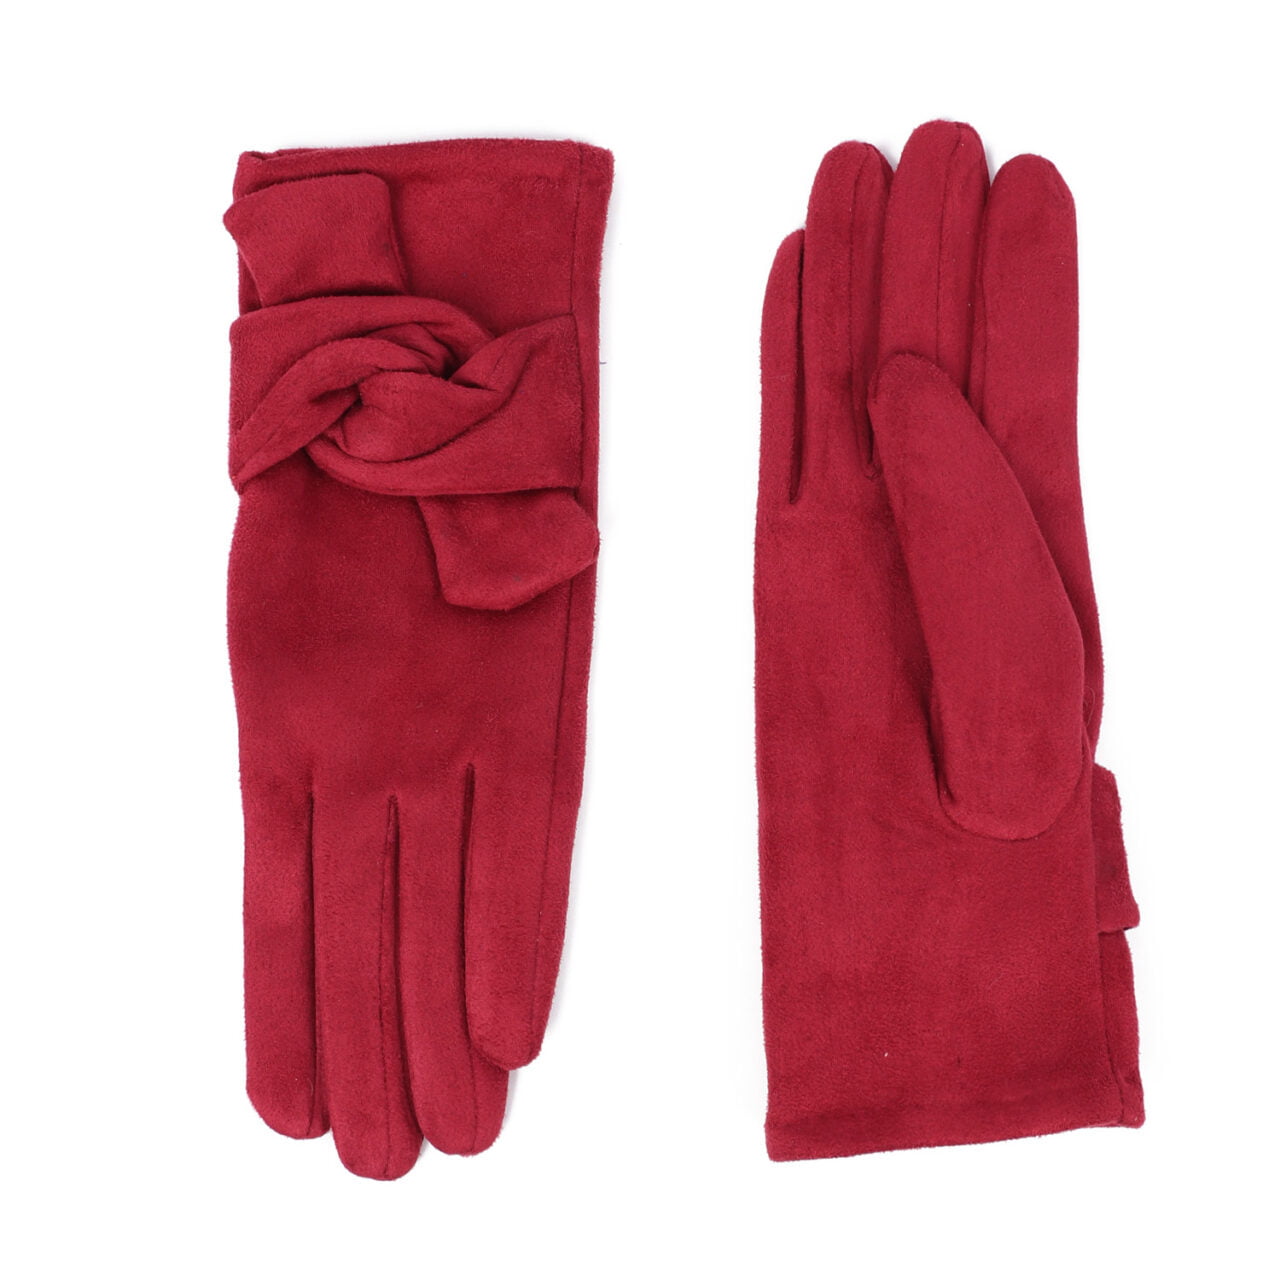 Fab Gifts | Winter Accessories Winter Gloves Alexandra cross-strap Burgundy by Weirs of Baggot Street